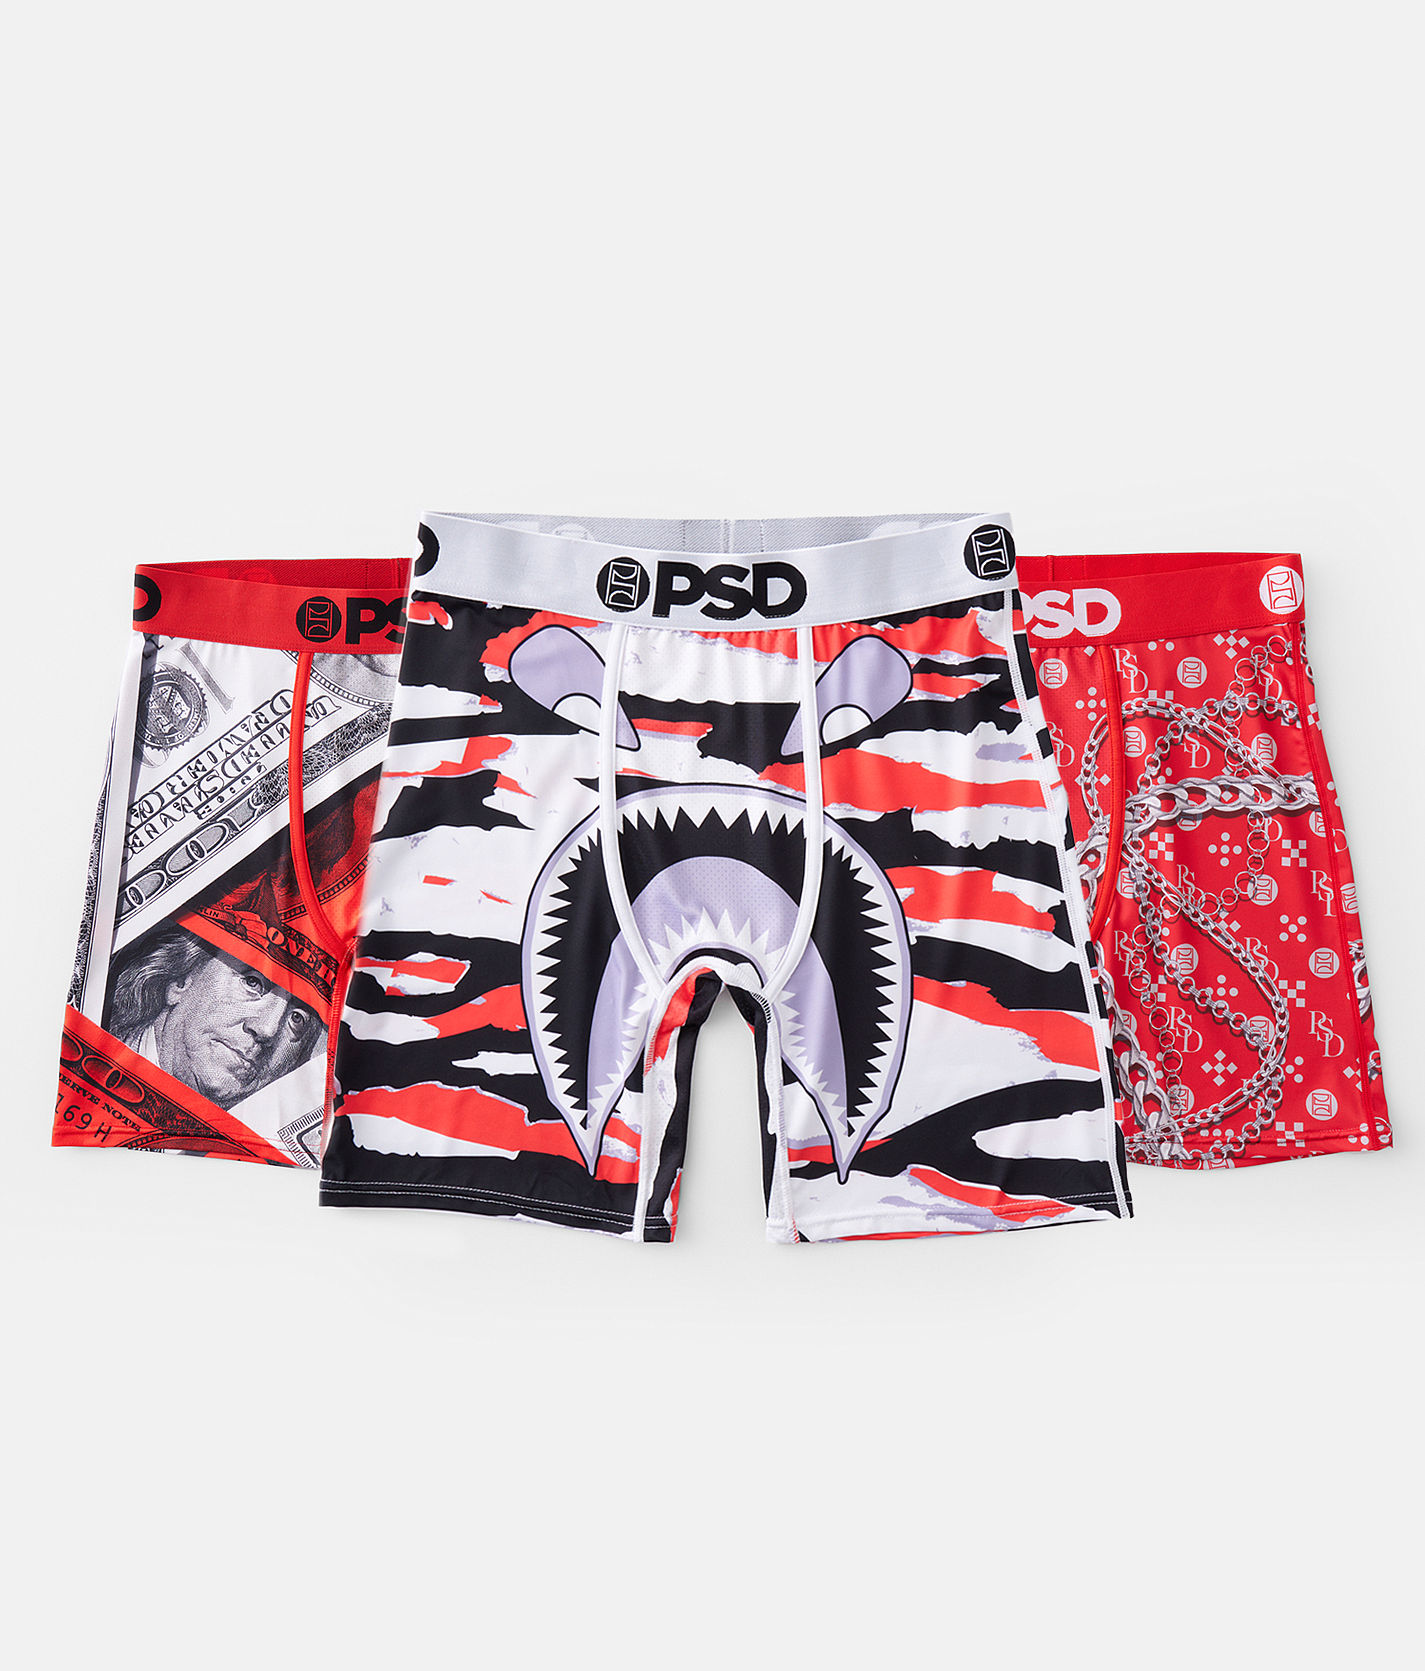 PSD Men's 95/5 3-Pack Redgryblk Boxer Briefs, Multi, XL, Multi